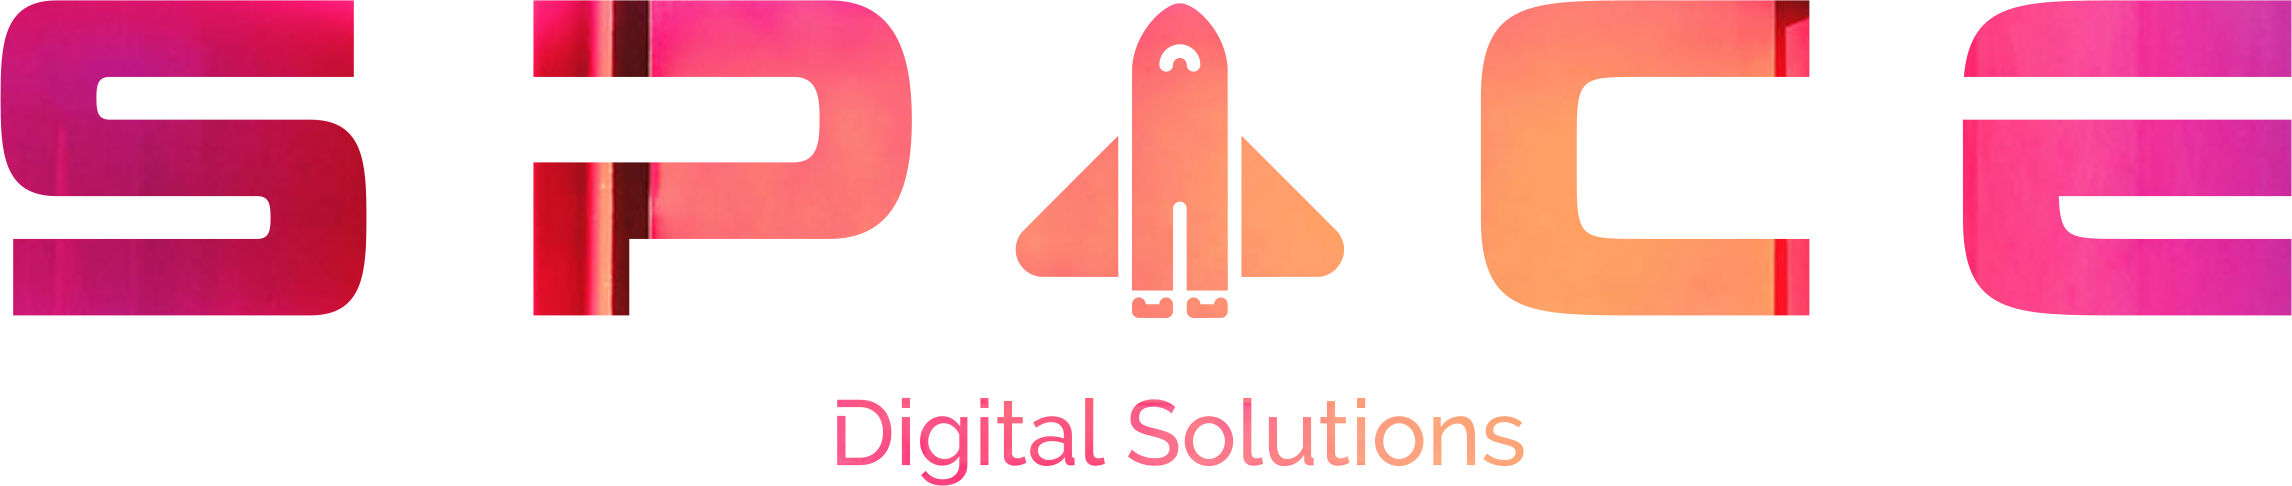 Space Digital Solutions